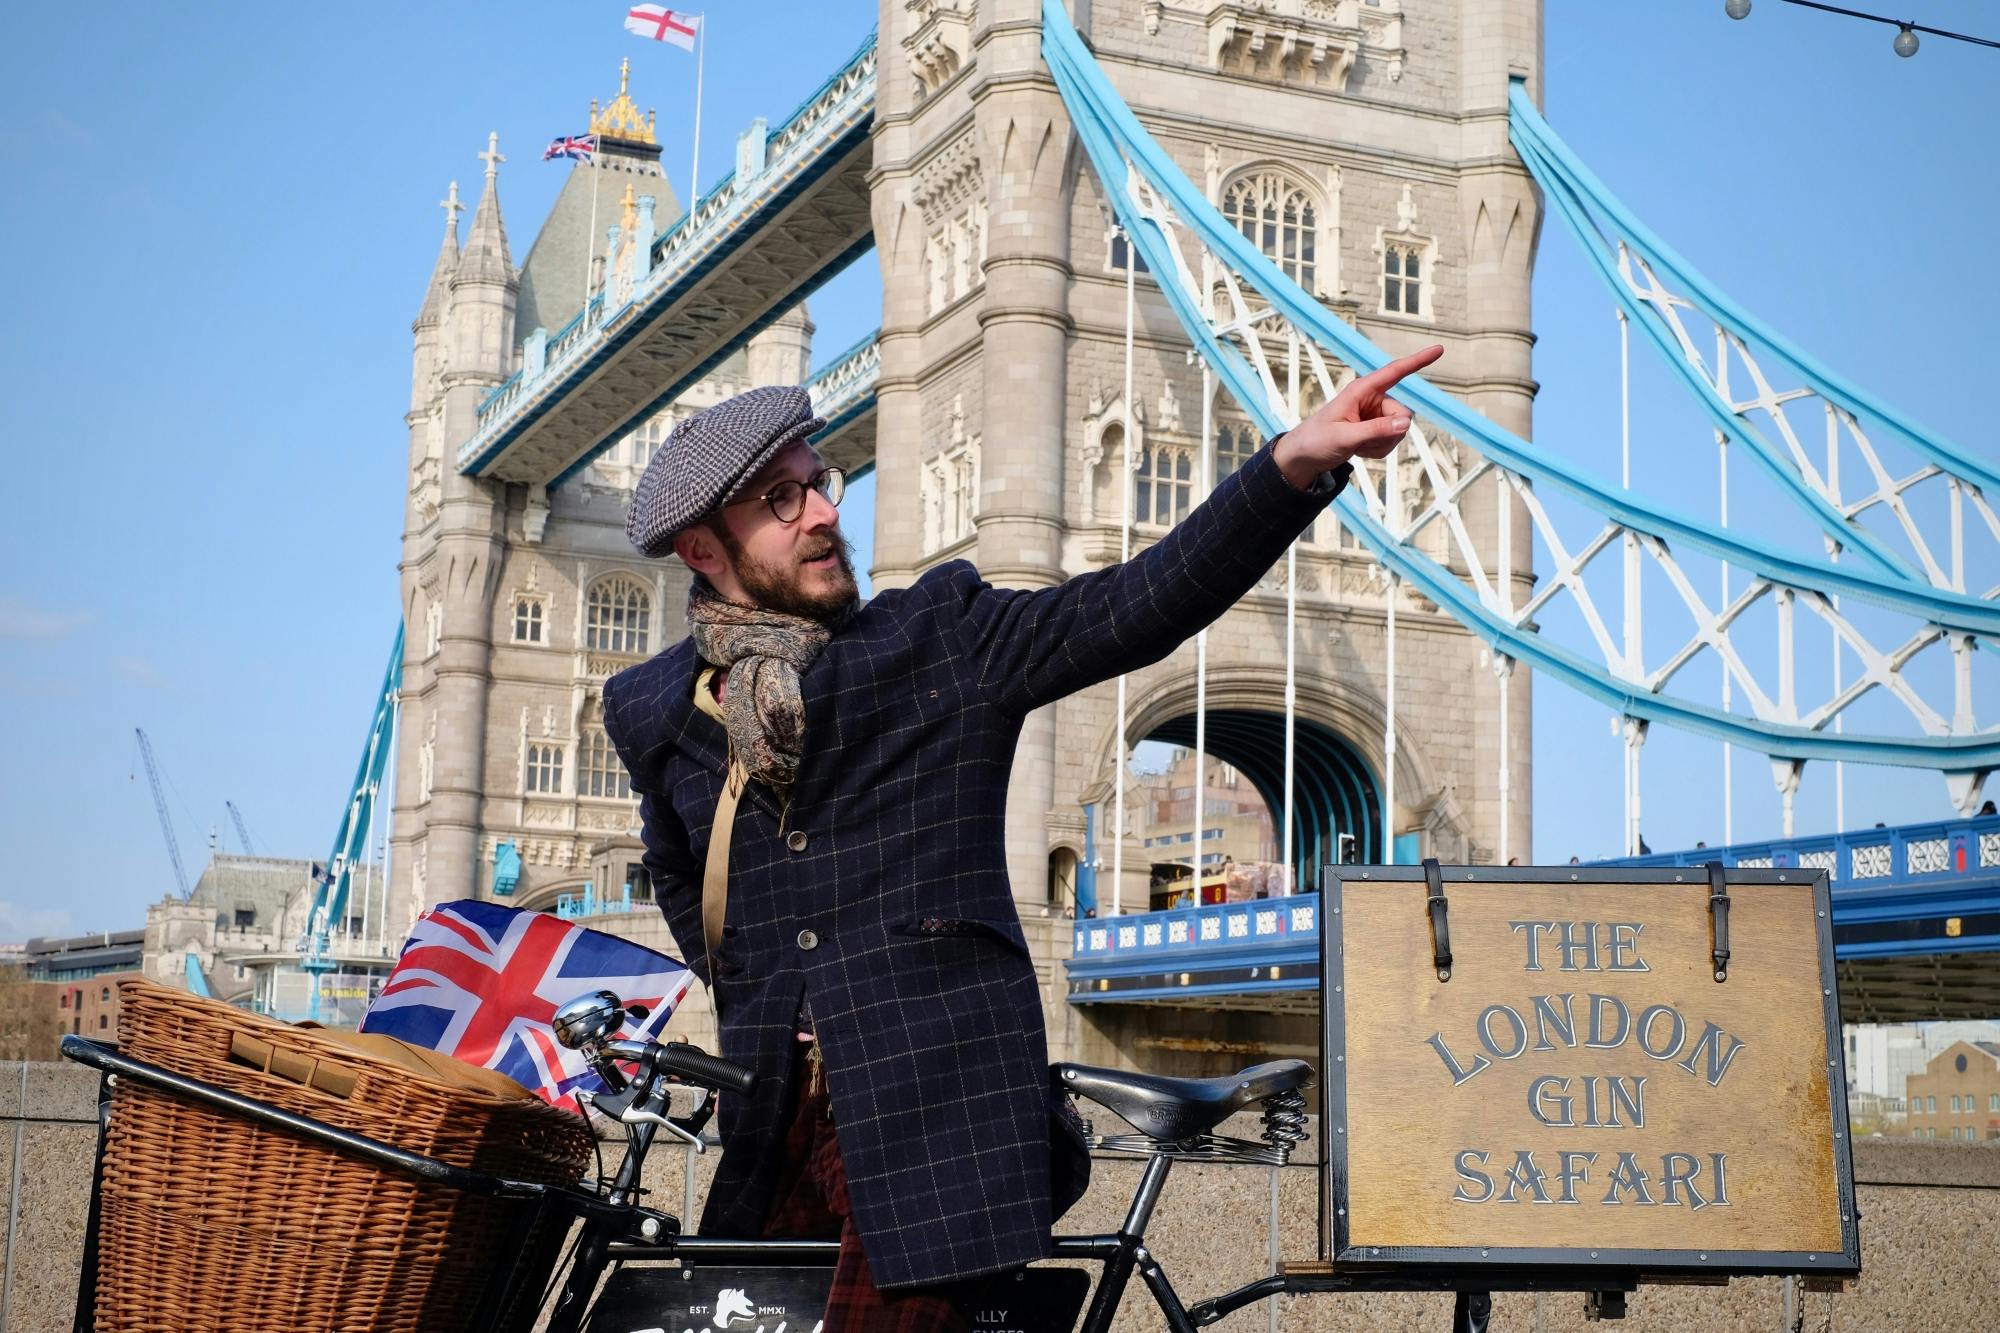 "London gin safari" guided bike tour with gin tasting